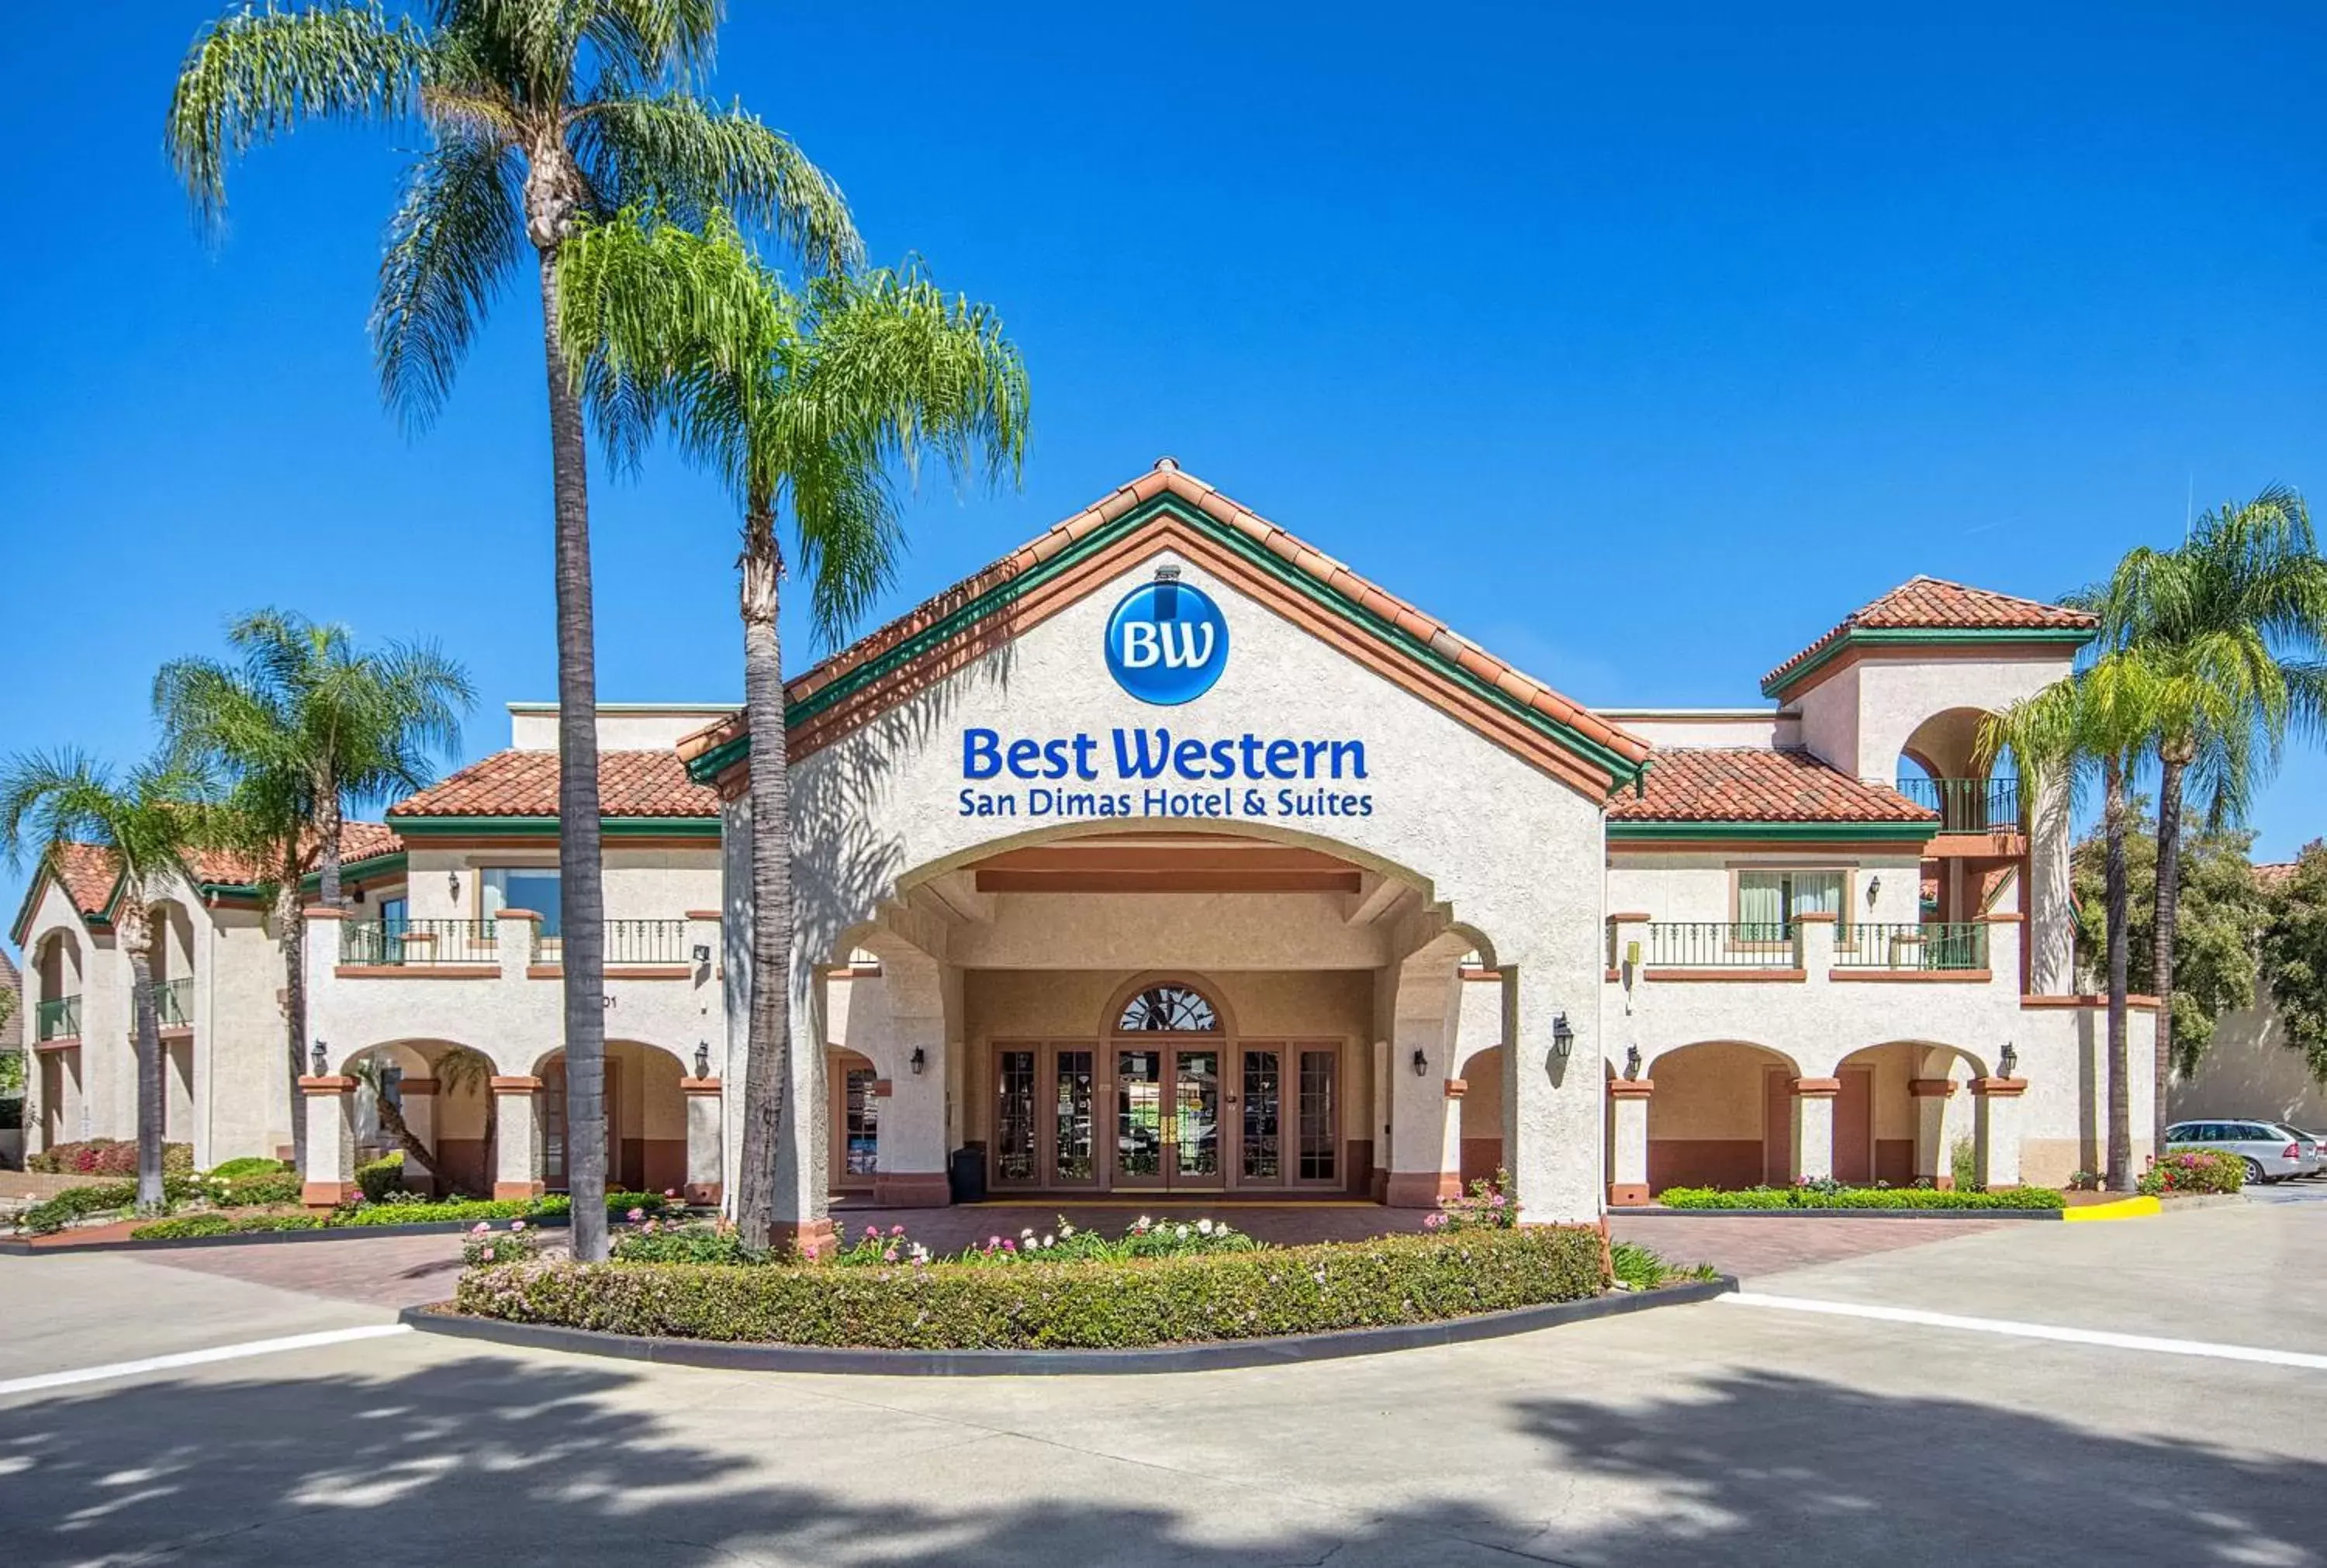 Property building in Best Western San Dimas Hotel & Suites